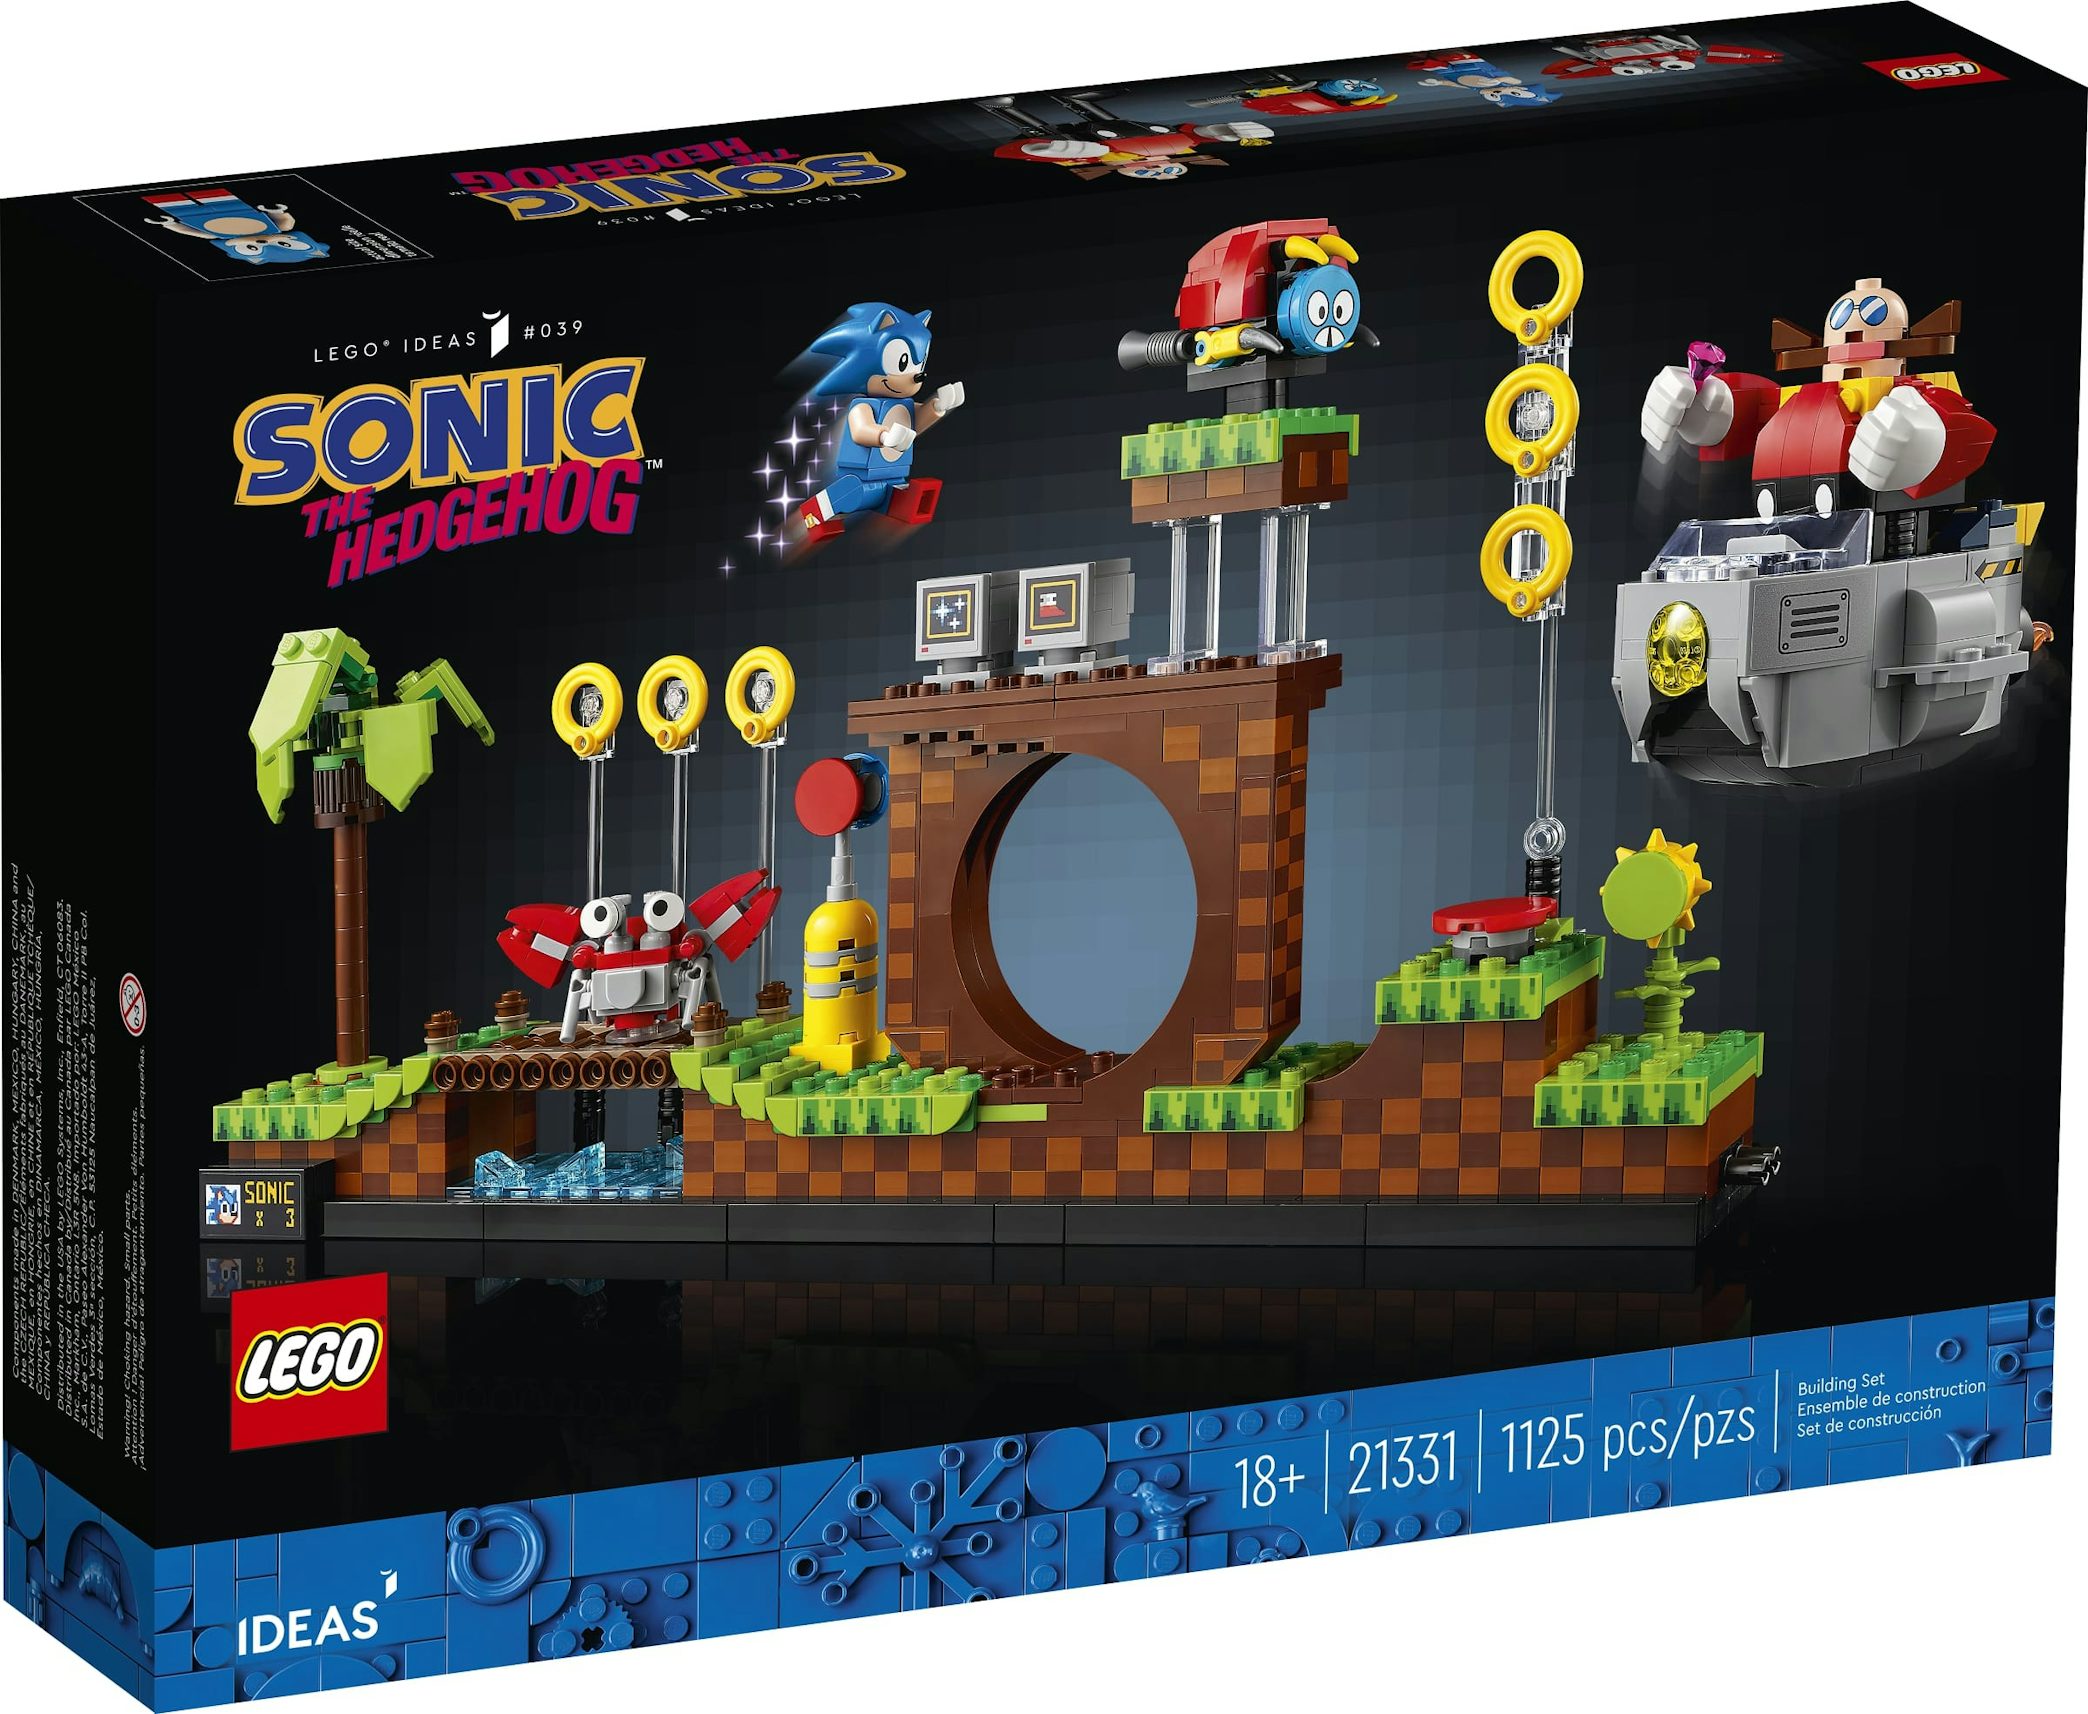 https://images.stockx.com/images/LEGO-Ideas-Sonic-The-Hedgehog-Set-21331.jpg?fit=fill&bg=FFFFFF&w=1200&h=857&fm=jpg&auto=compress&dpr=2&trim=color&updated_at=1641589849&q=60